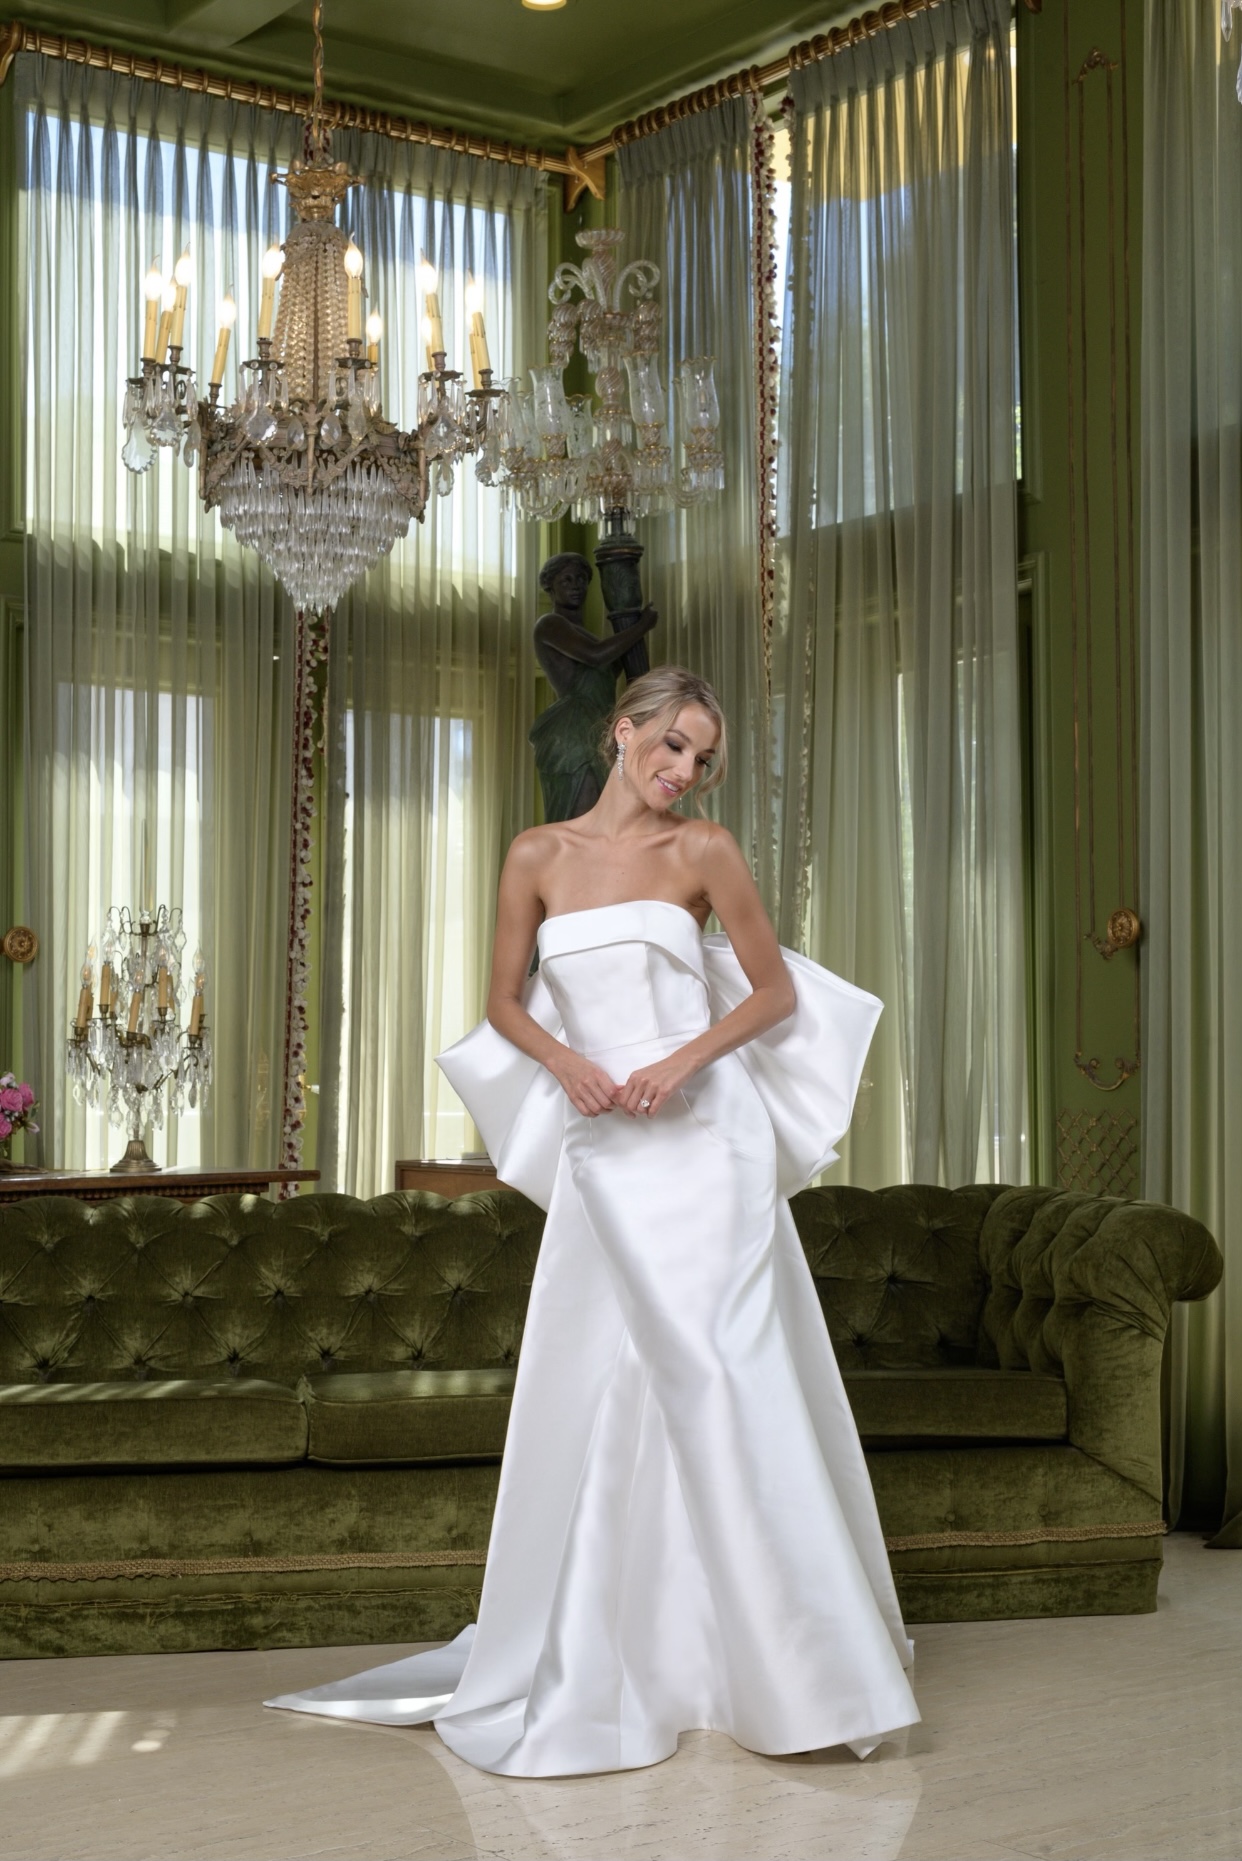 Estee couture | Roma Sposa Bridal Shop